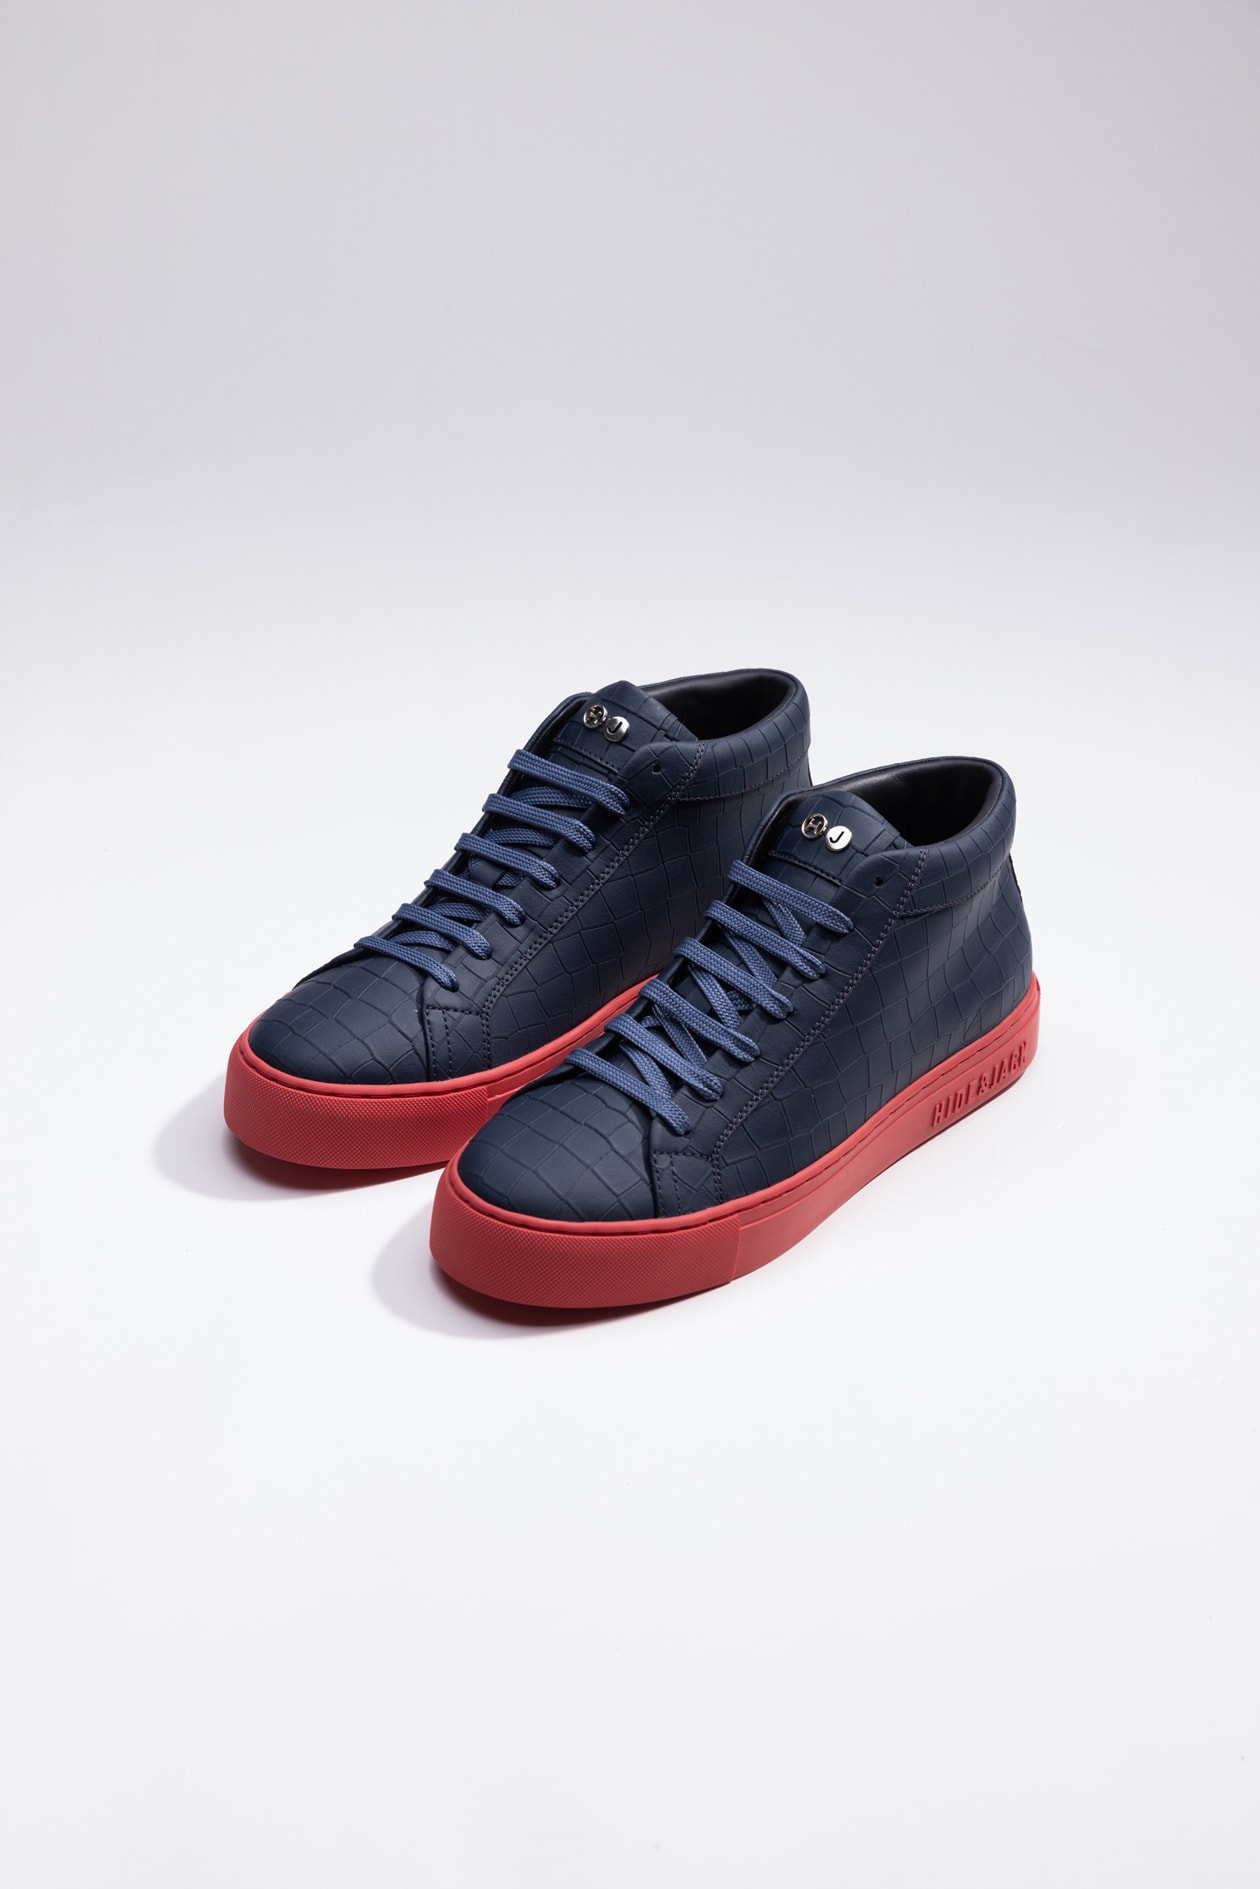 Hide & Jack High Top Sneaker - Essence Blue Red